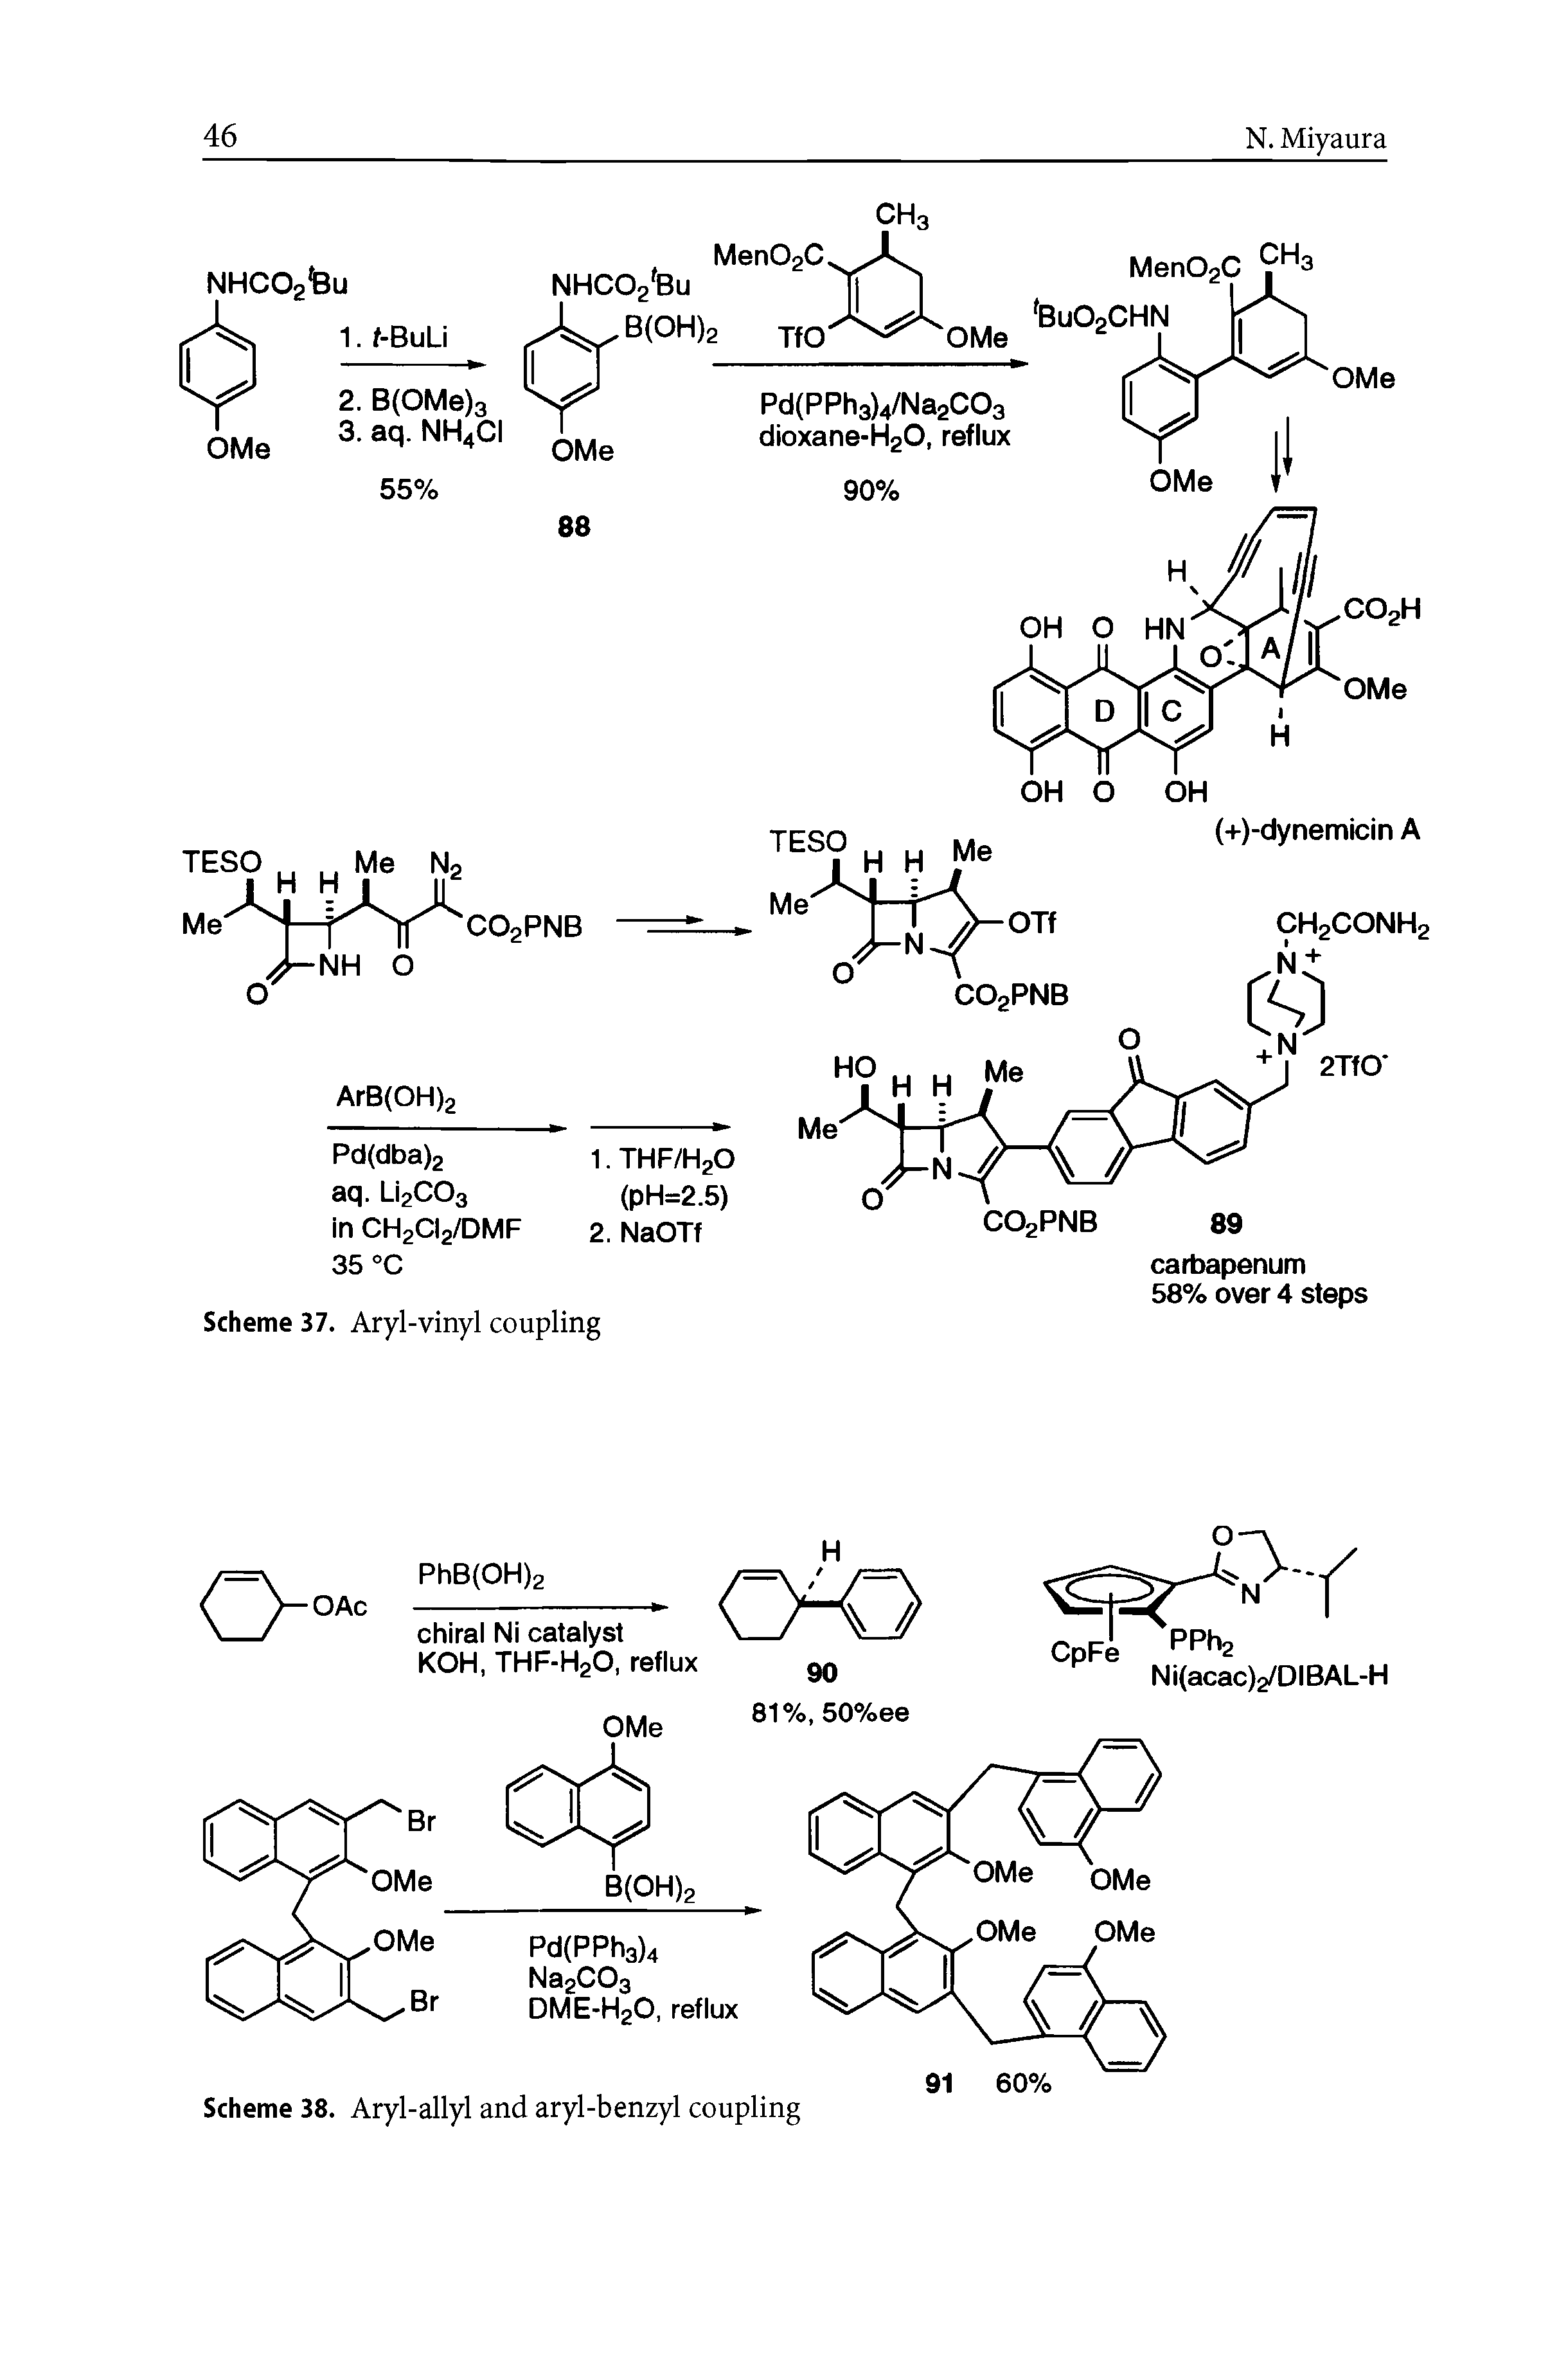 Scheme 38. Aryl-allyl and aryl-benzyl coupling...